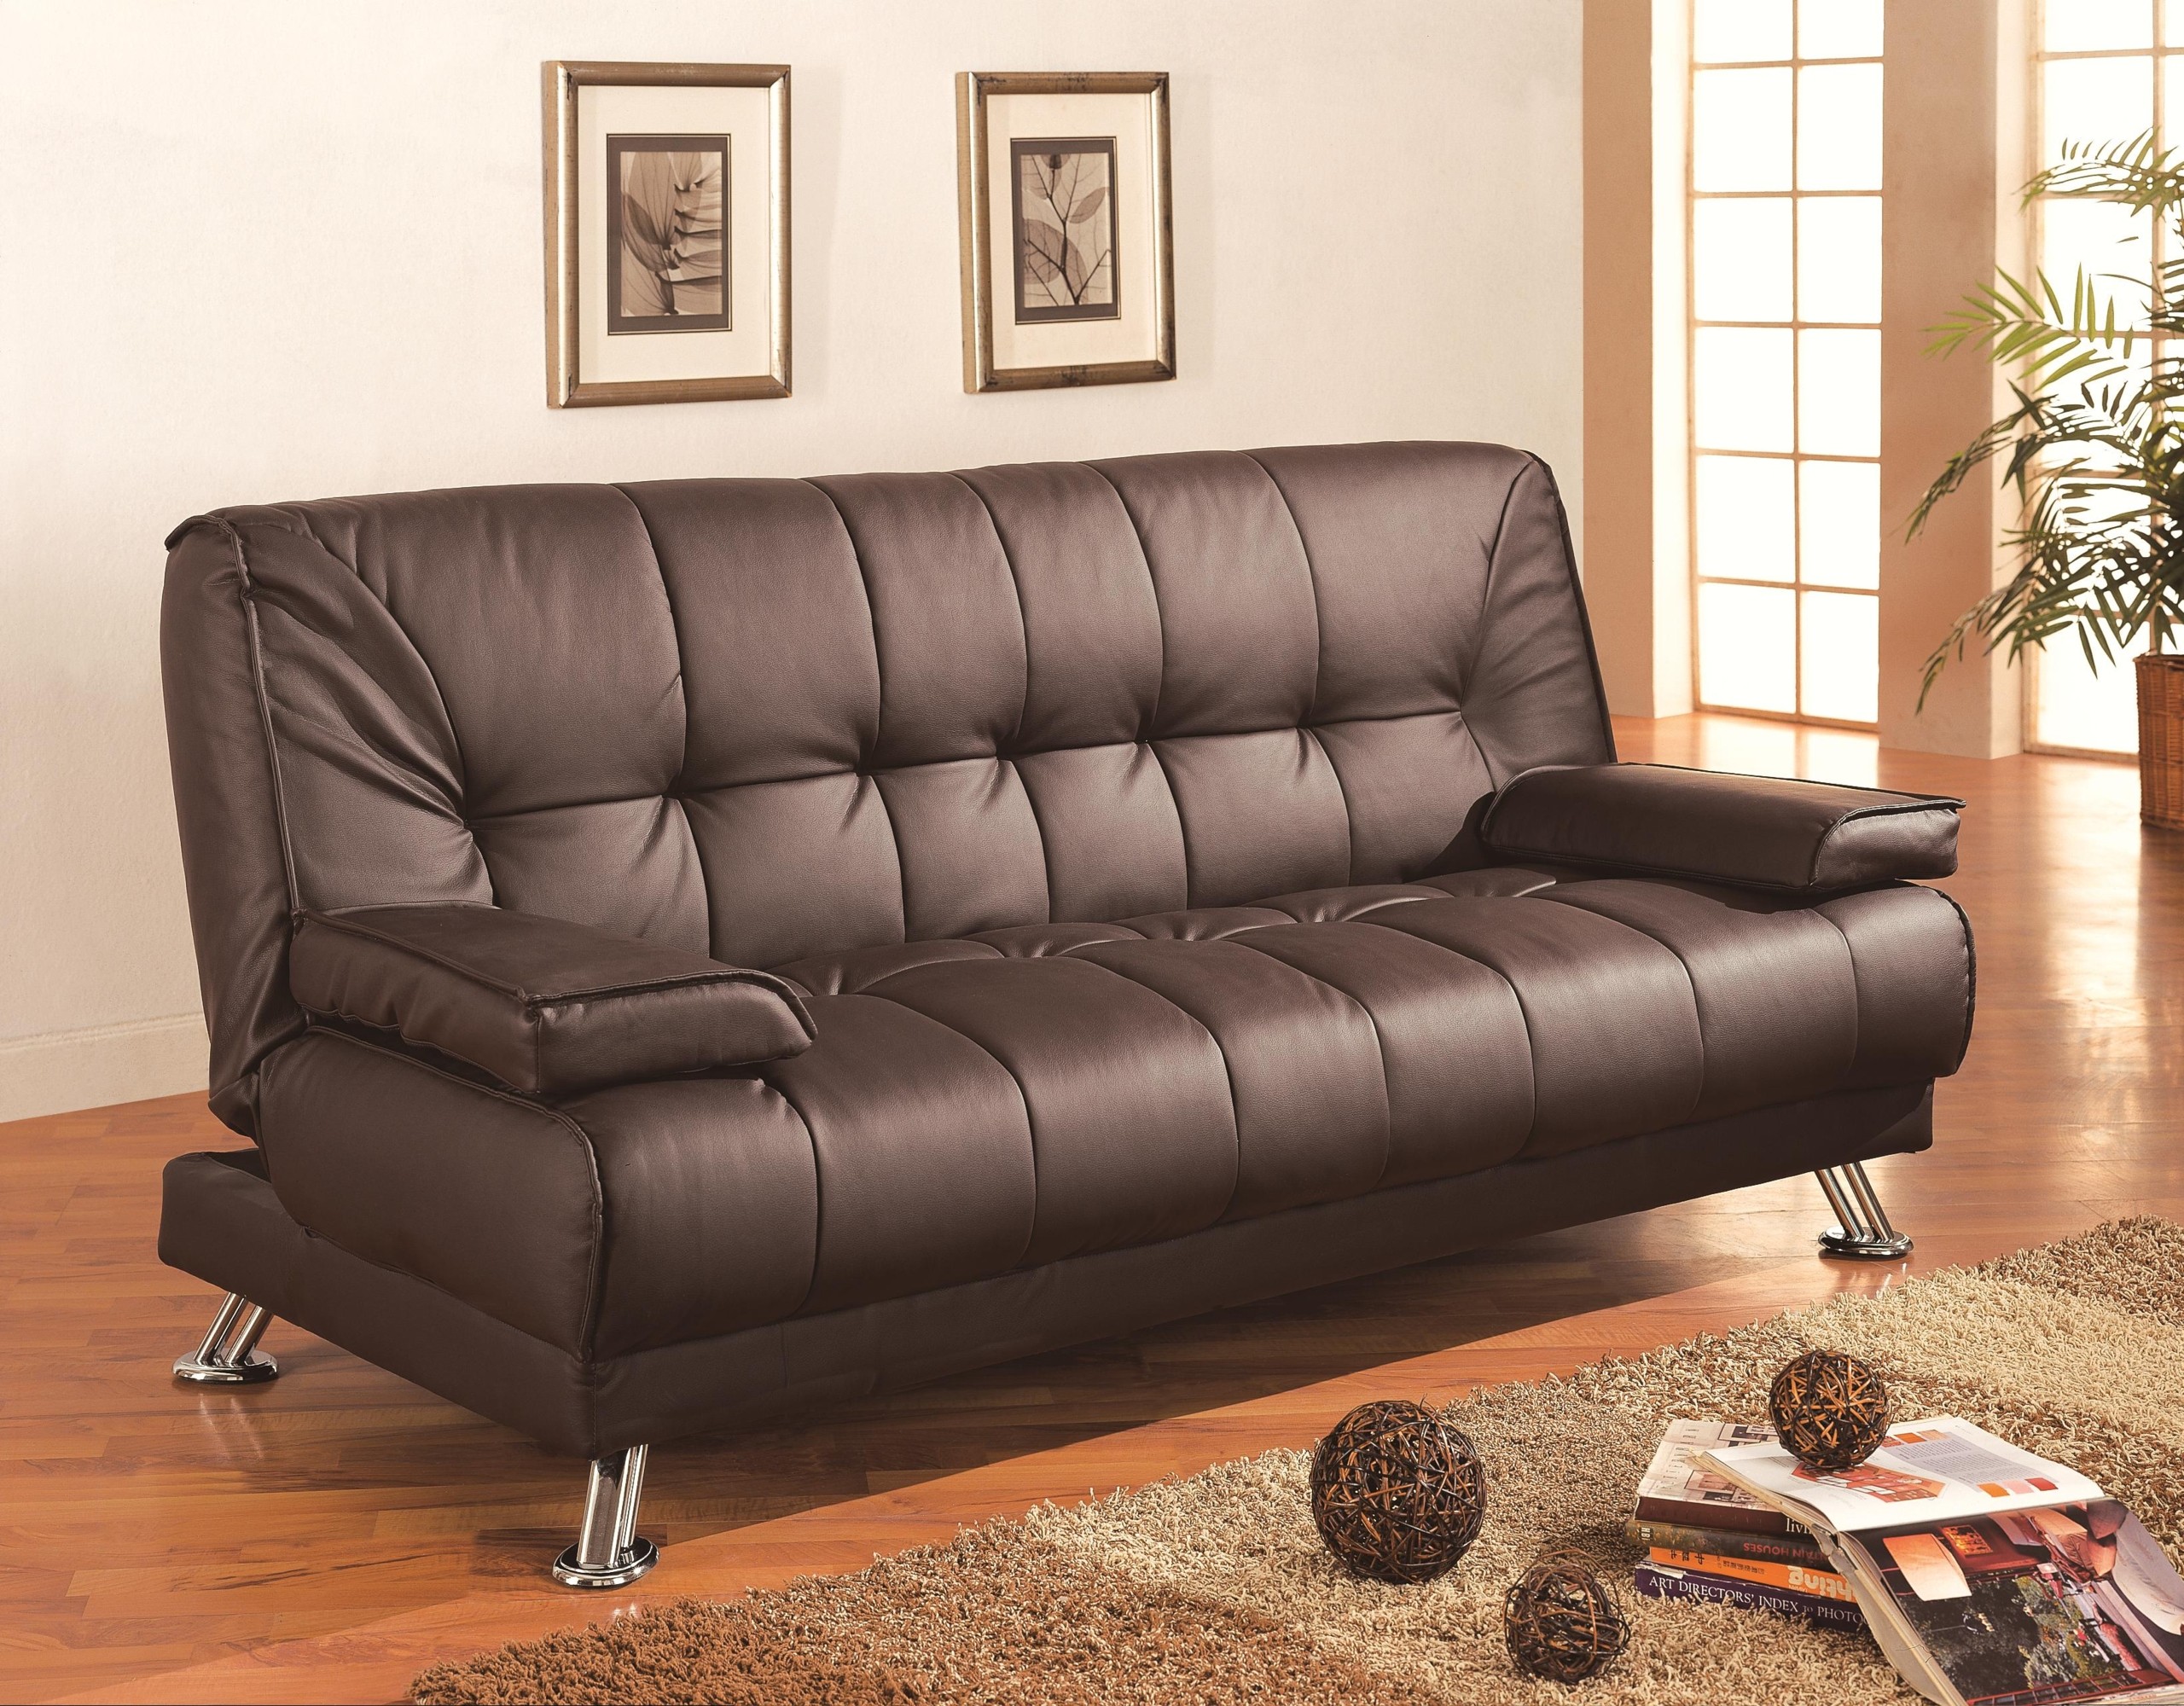 Foldable sofa bed